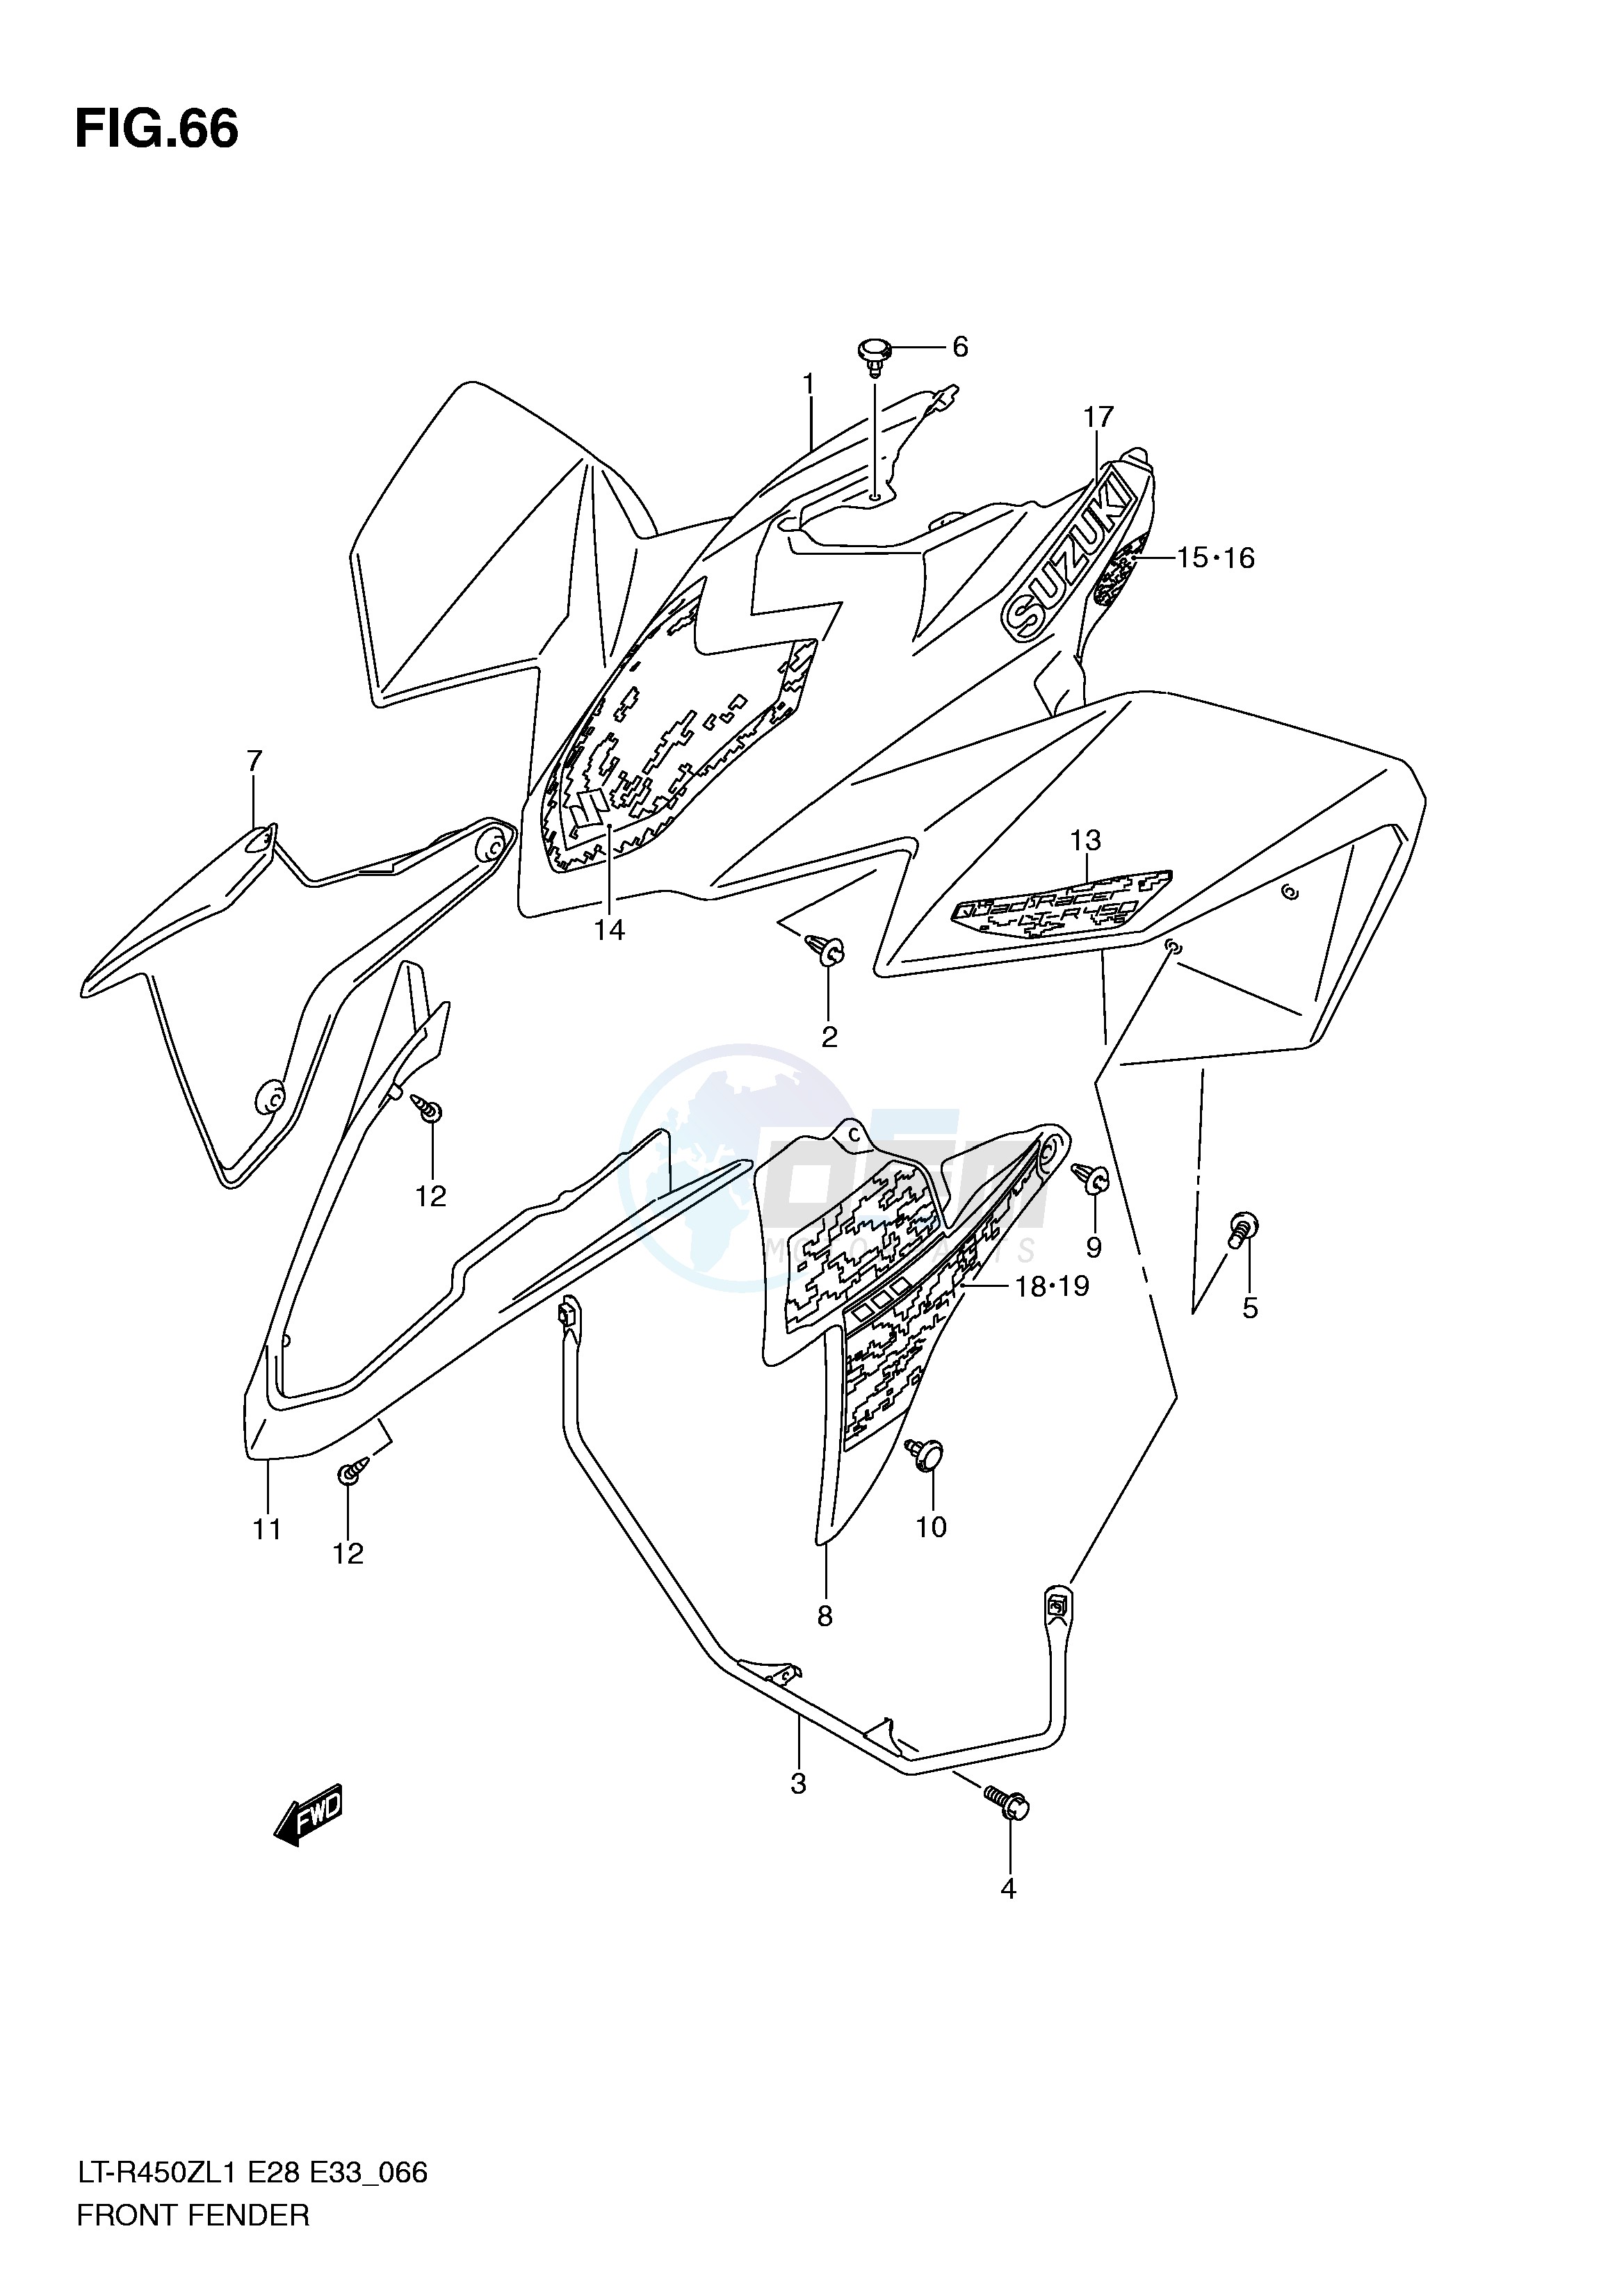 FRONT FENDER (LT-R450ZL1 E33) blueprint